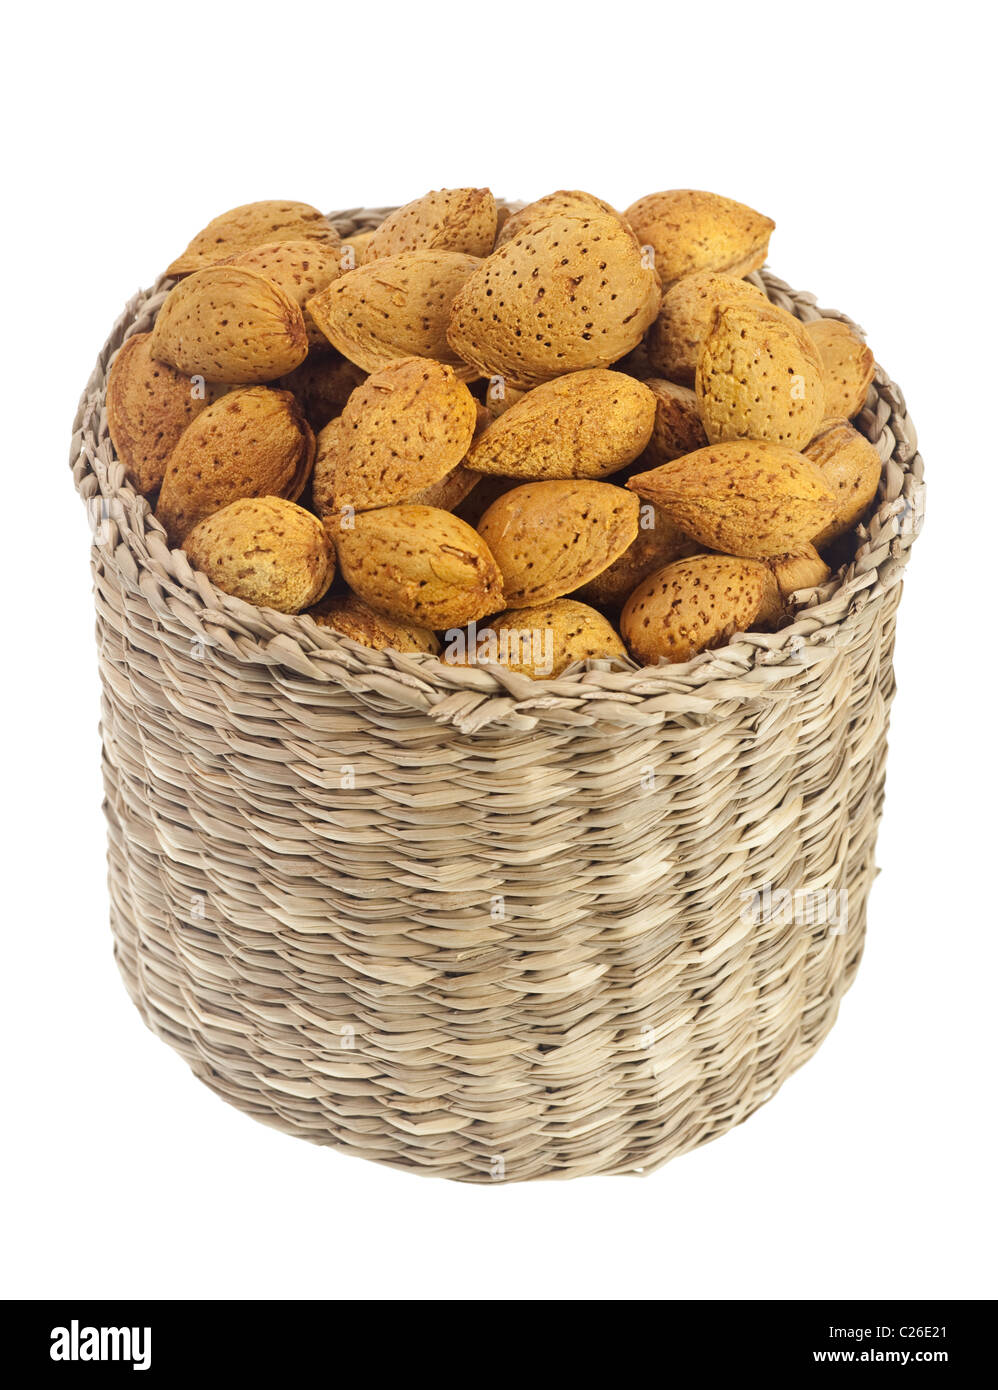 Basket of unshelled almonds isolated on white background Stock Photo